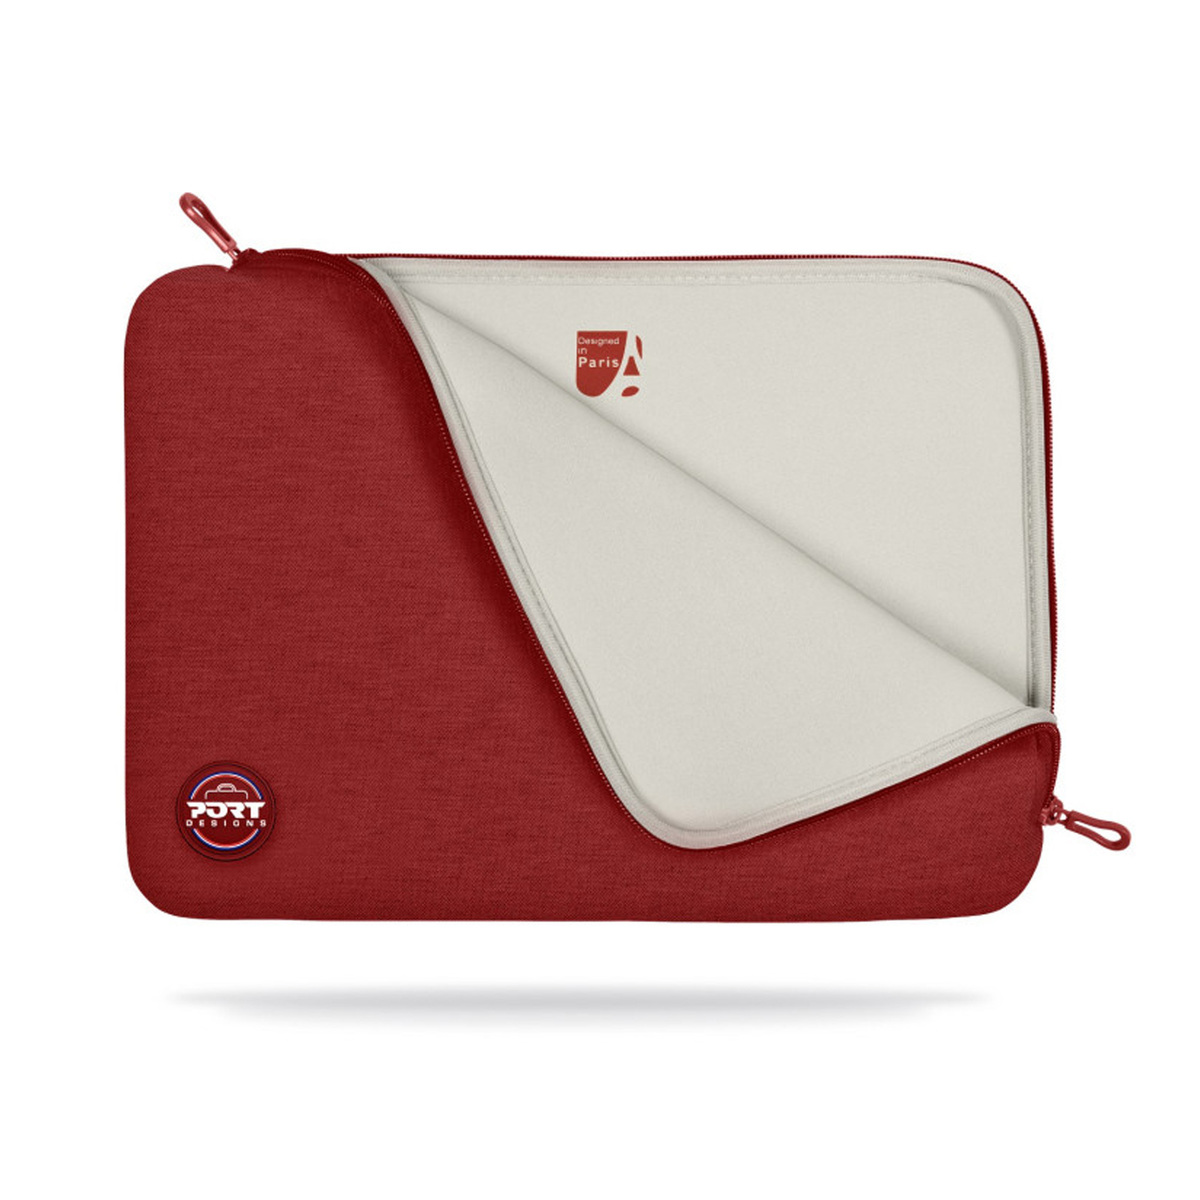 Port Notebook Sleeve Torino 11 13/14" Red